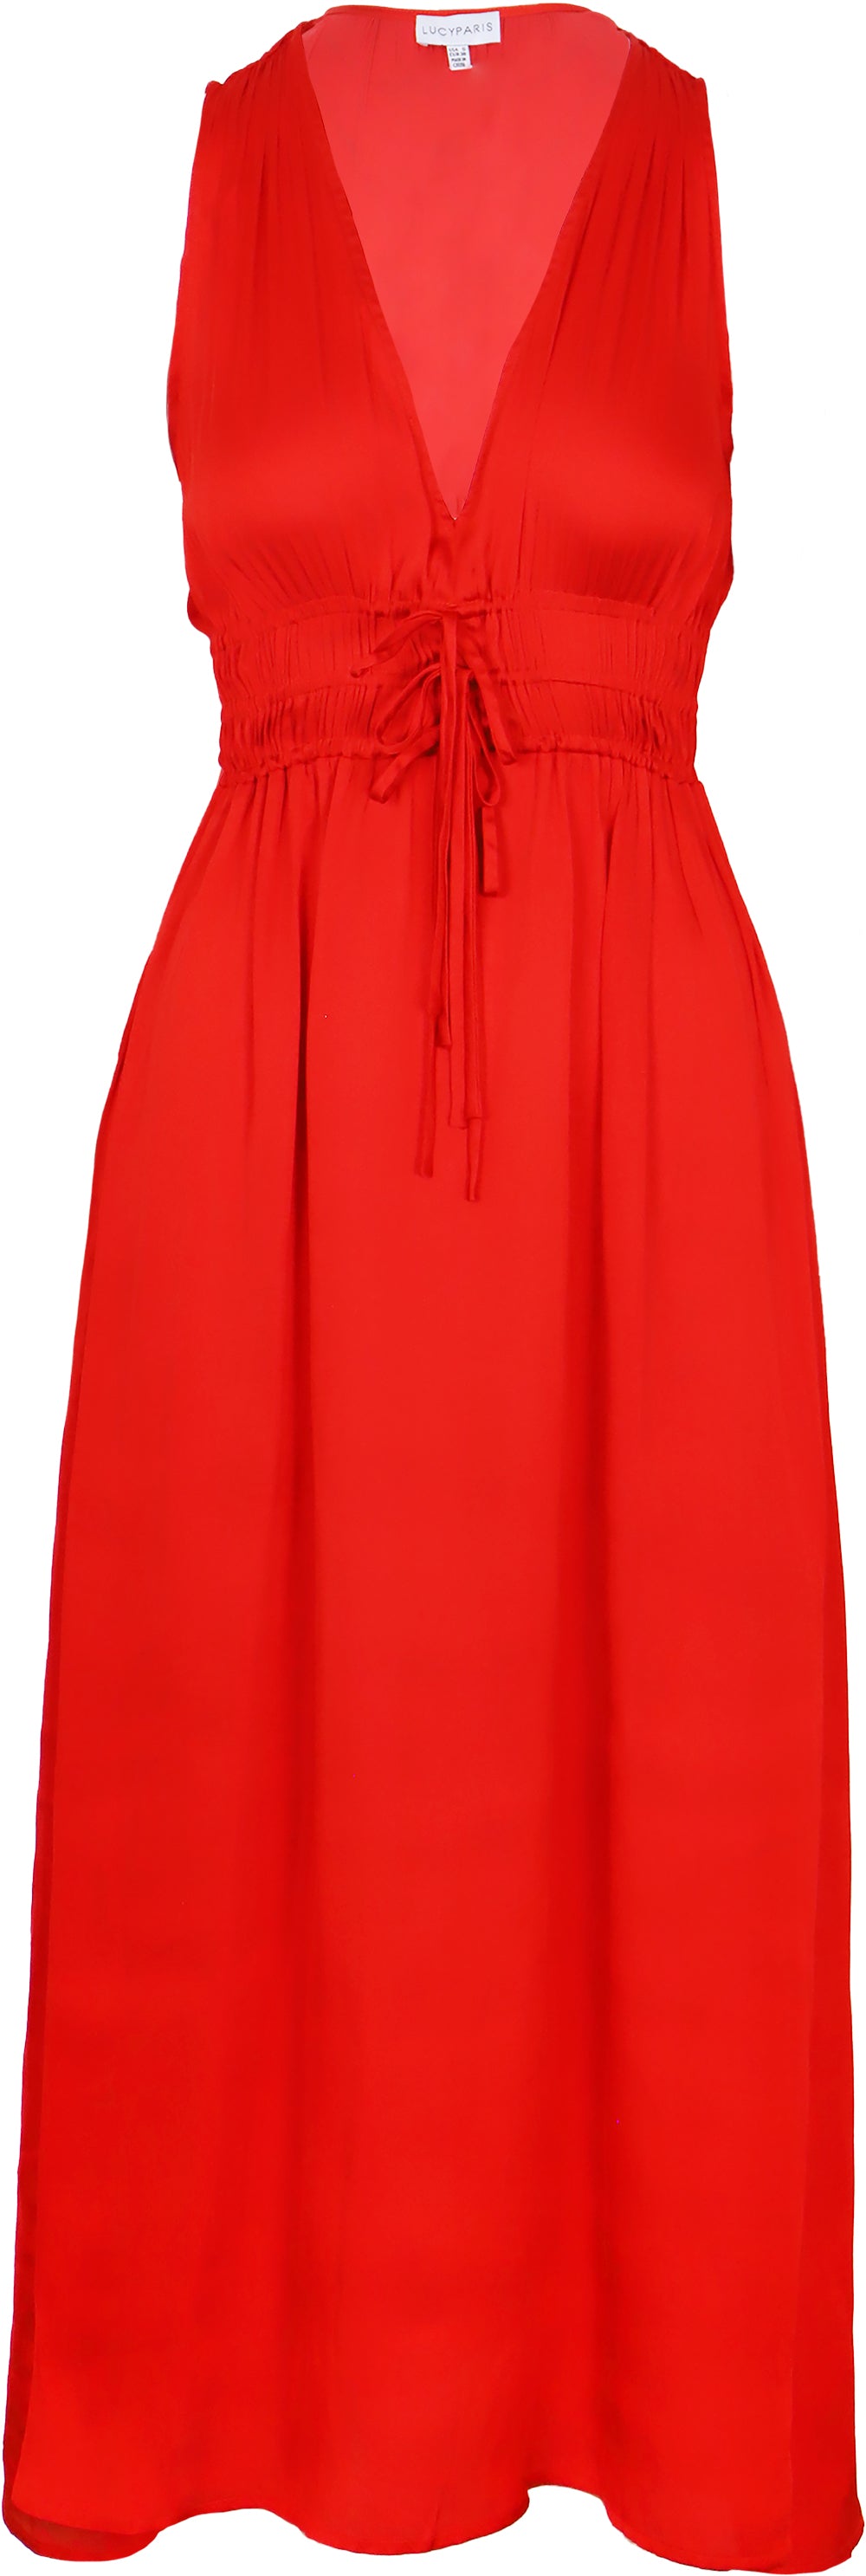 Lucy Paris Ilaria Satin Dress Red